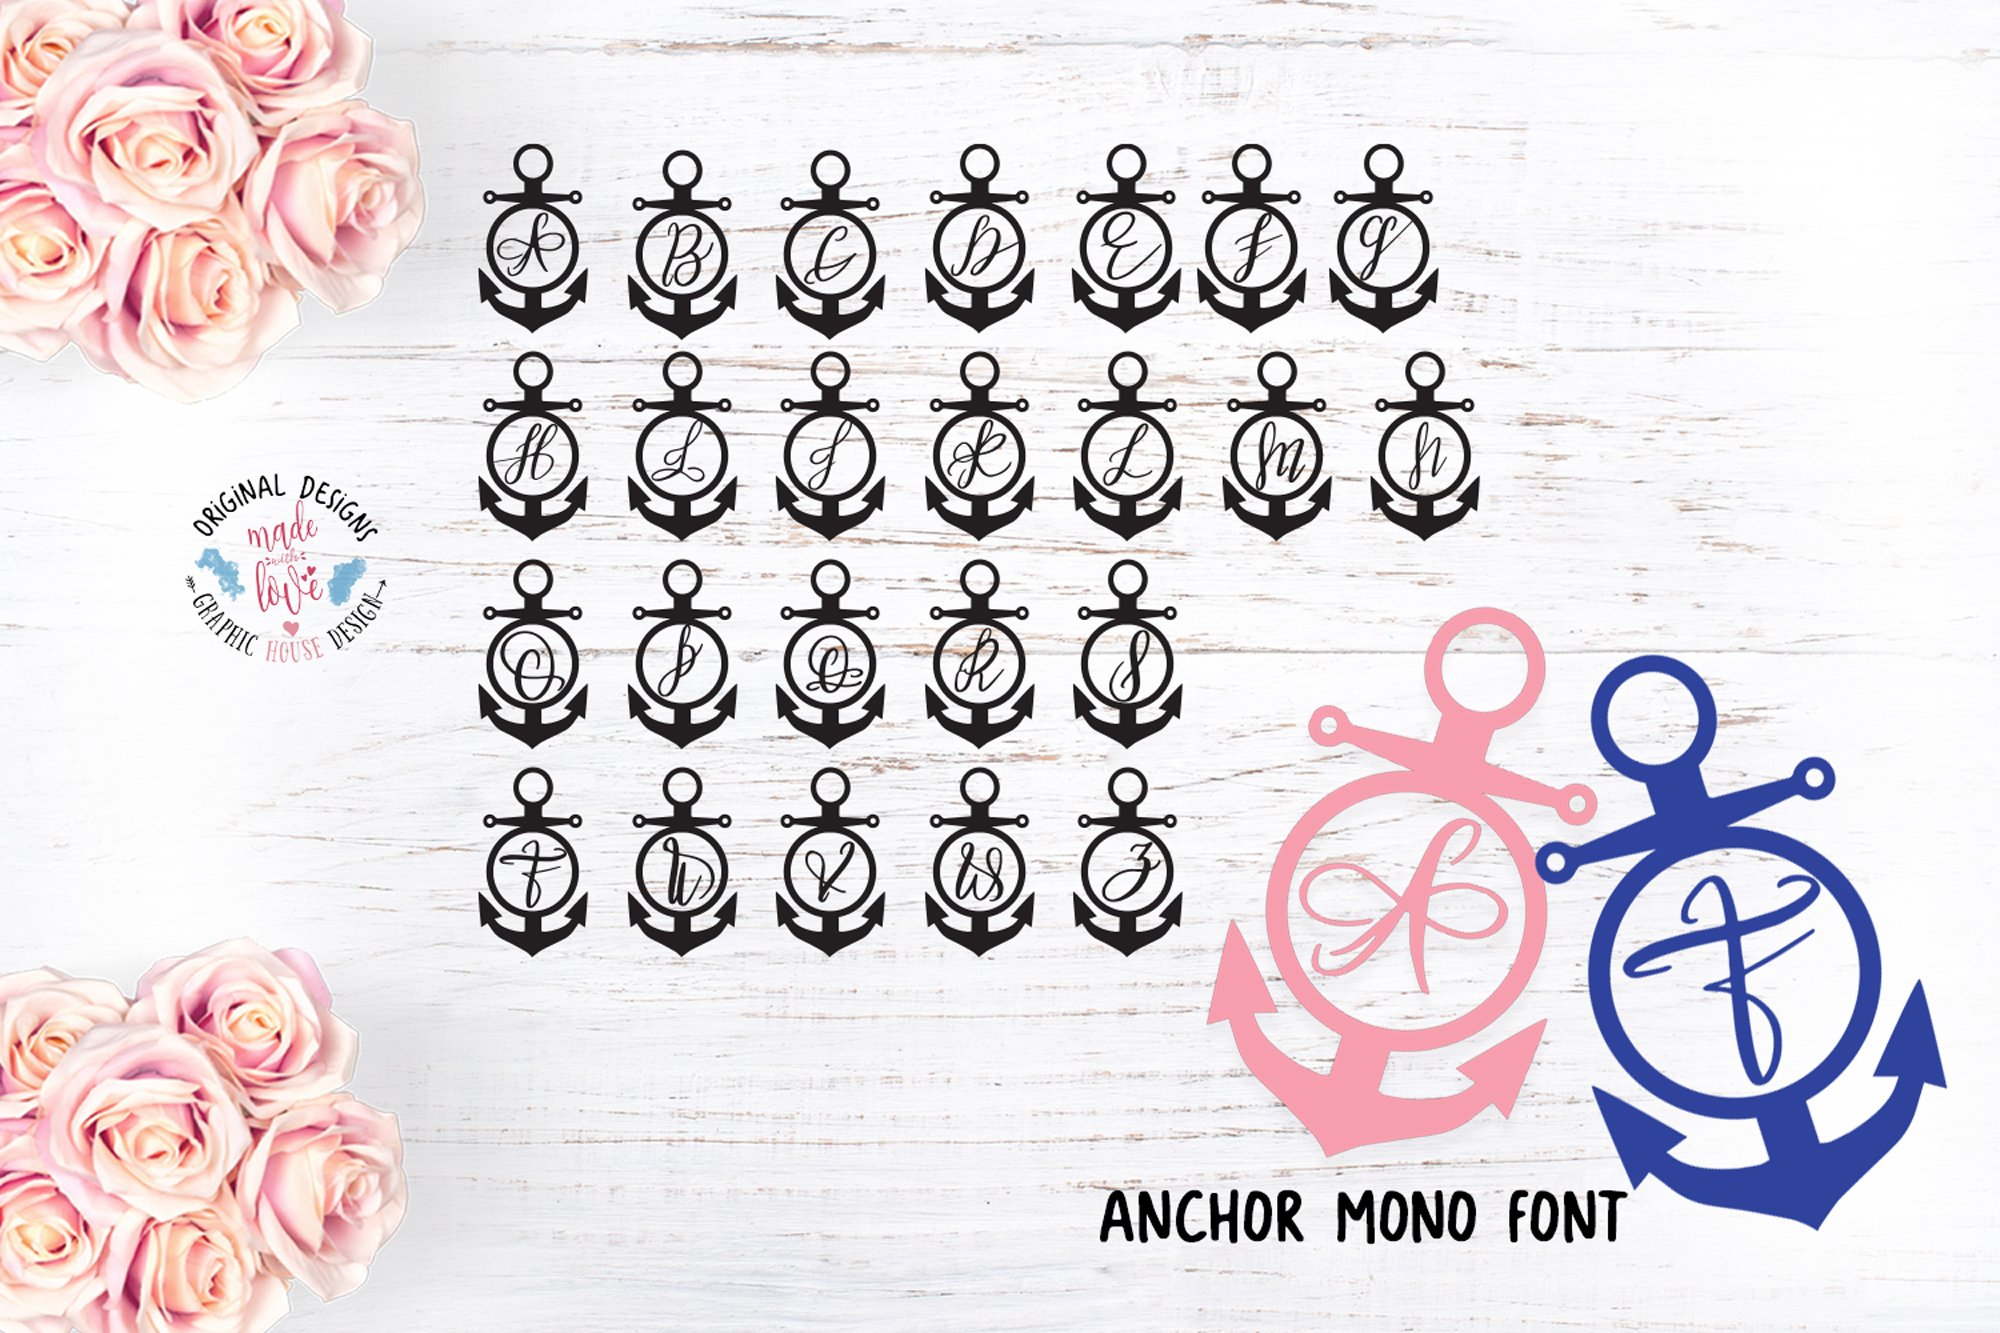 Anchor Mono Font cover image.